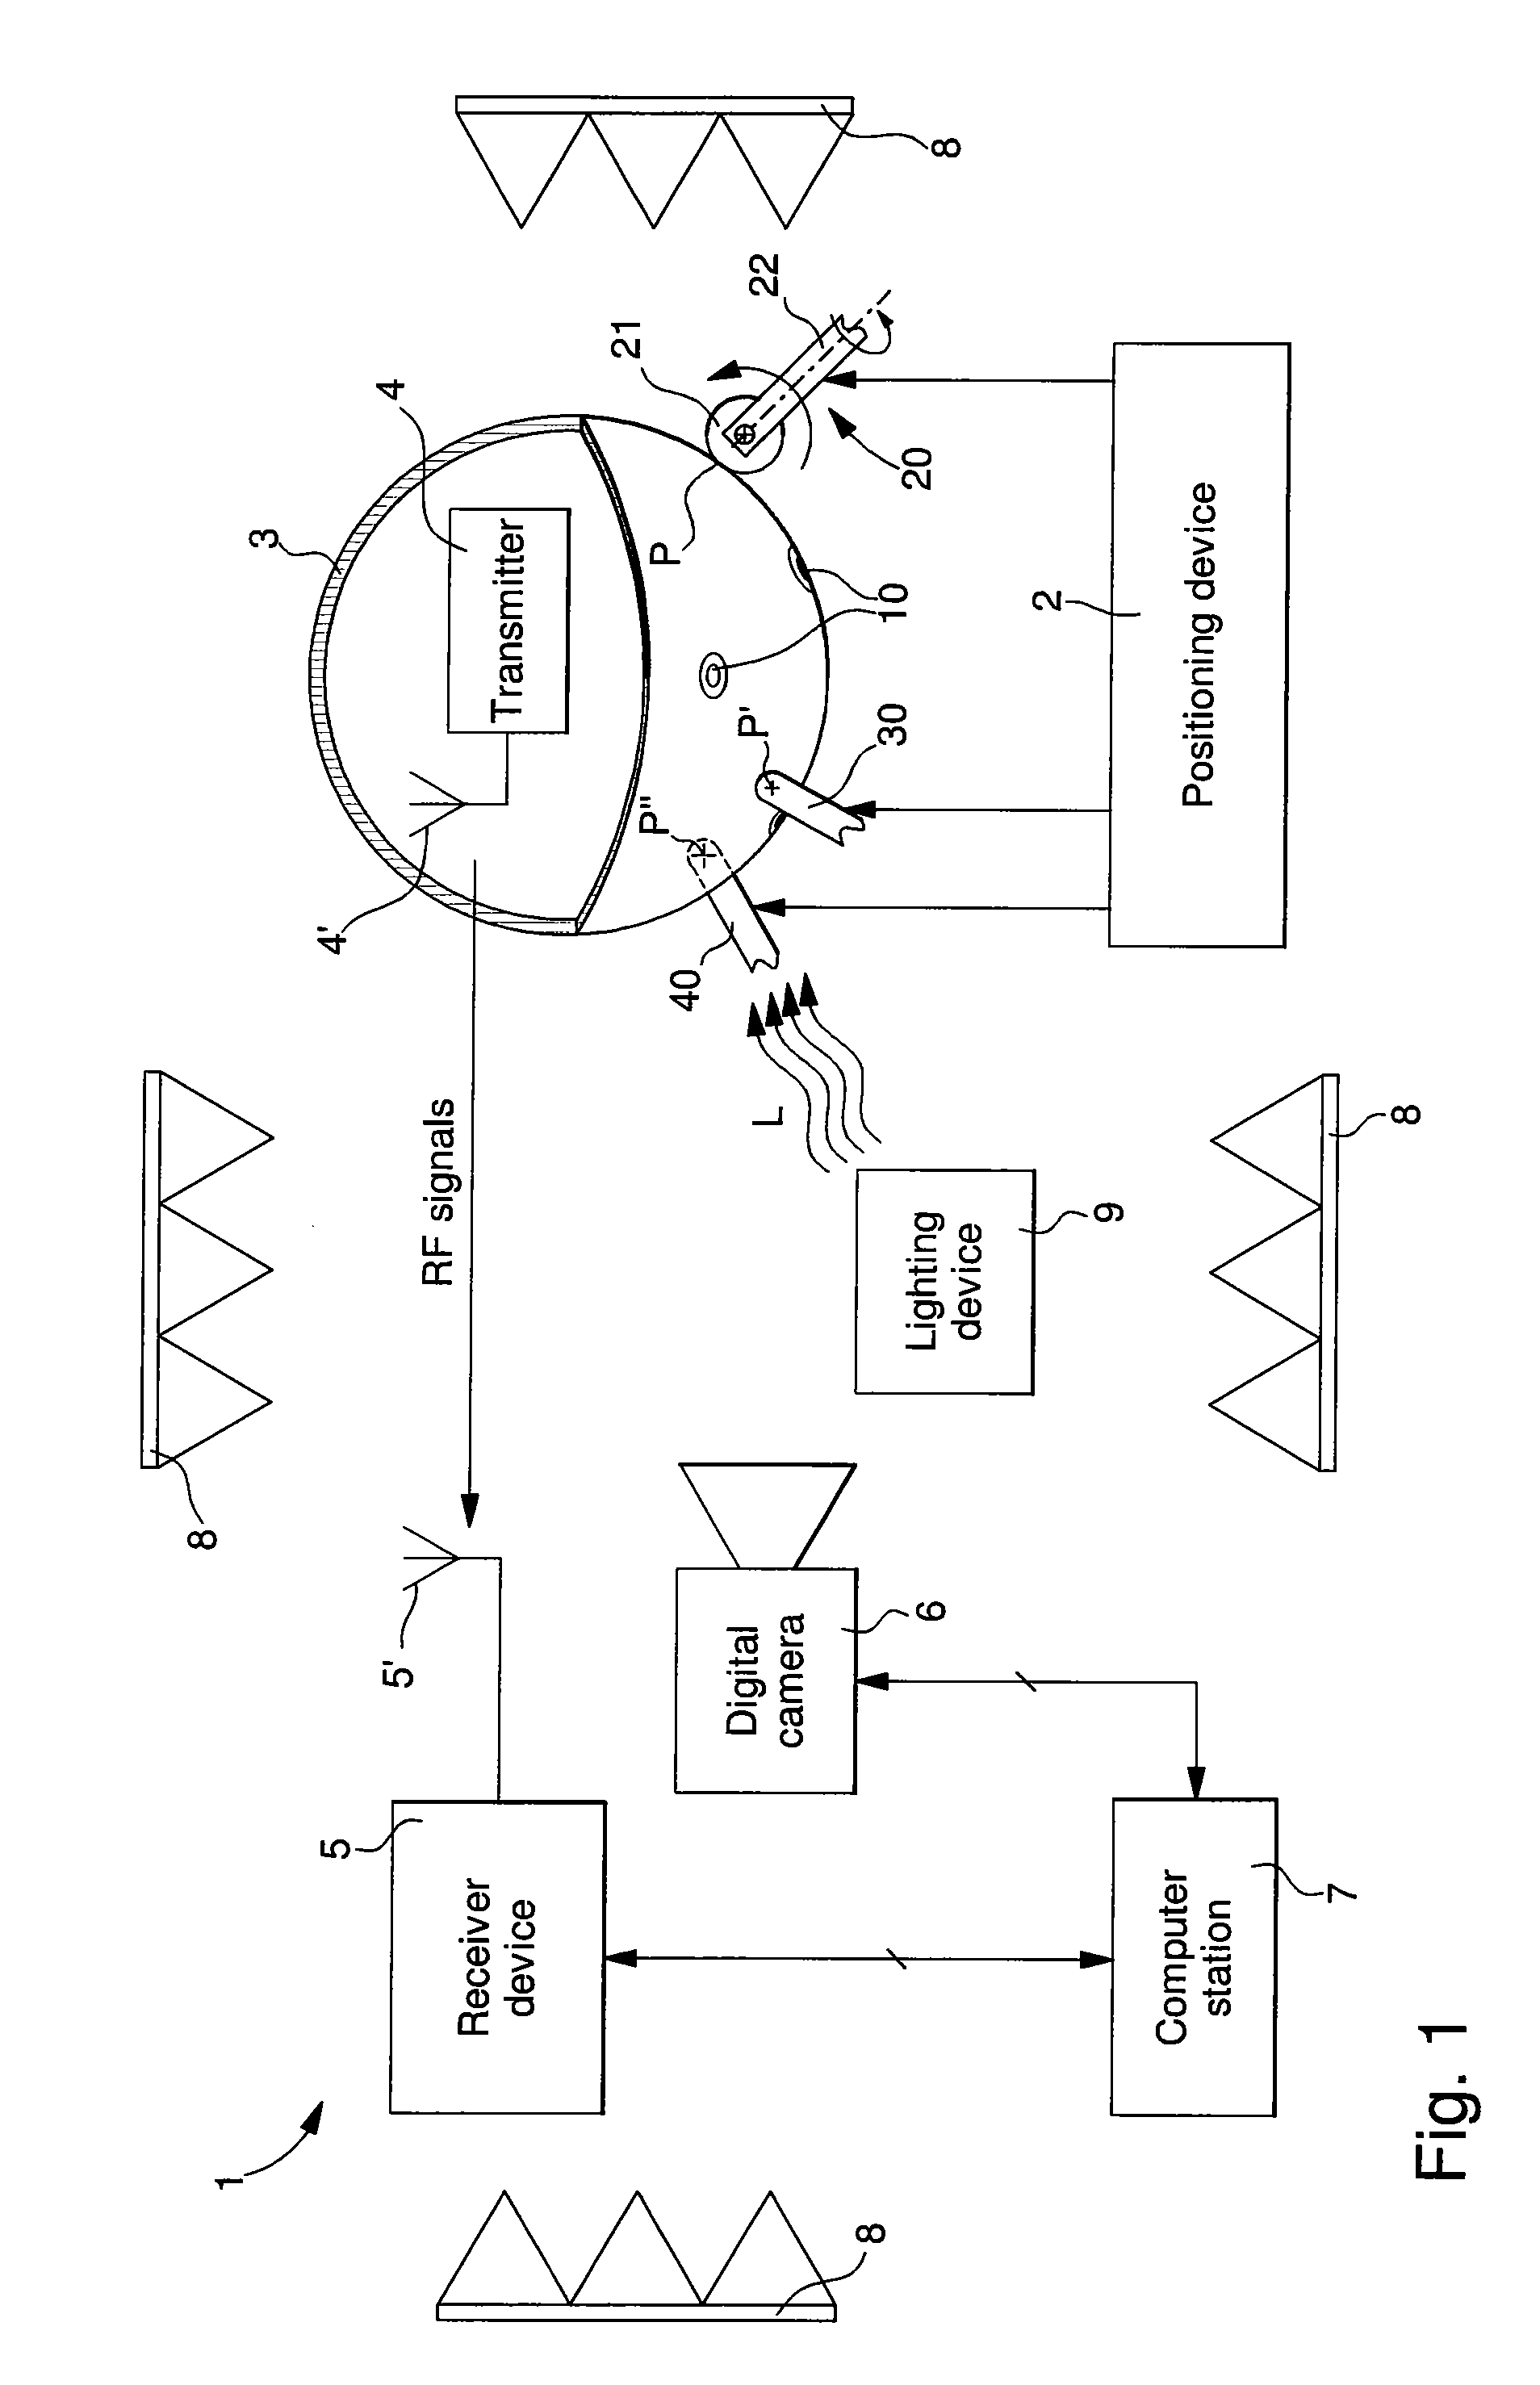 Radiation diagram measuring system for a transmitting antenna